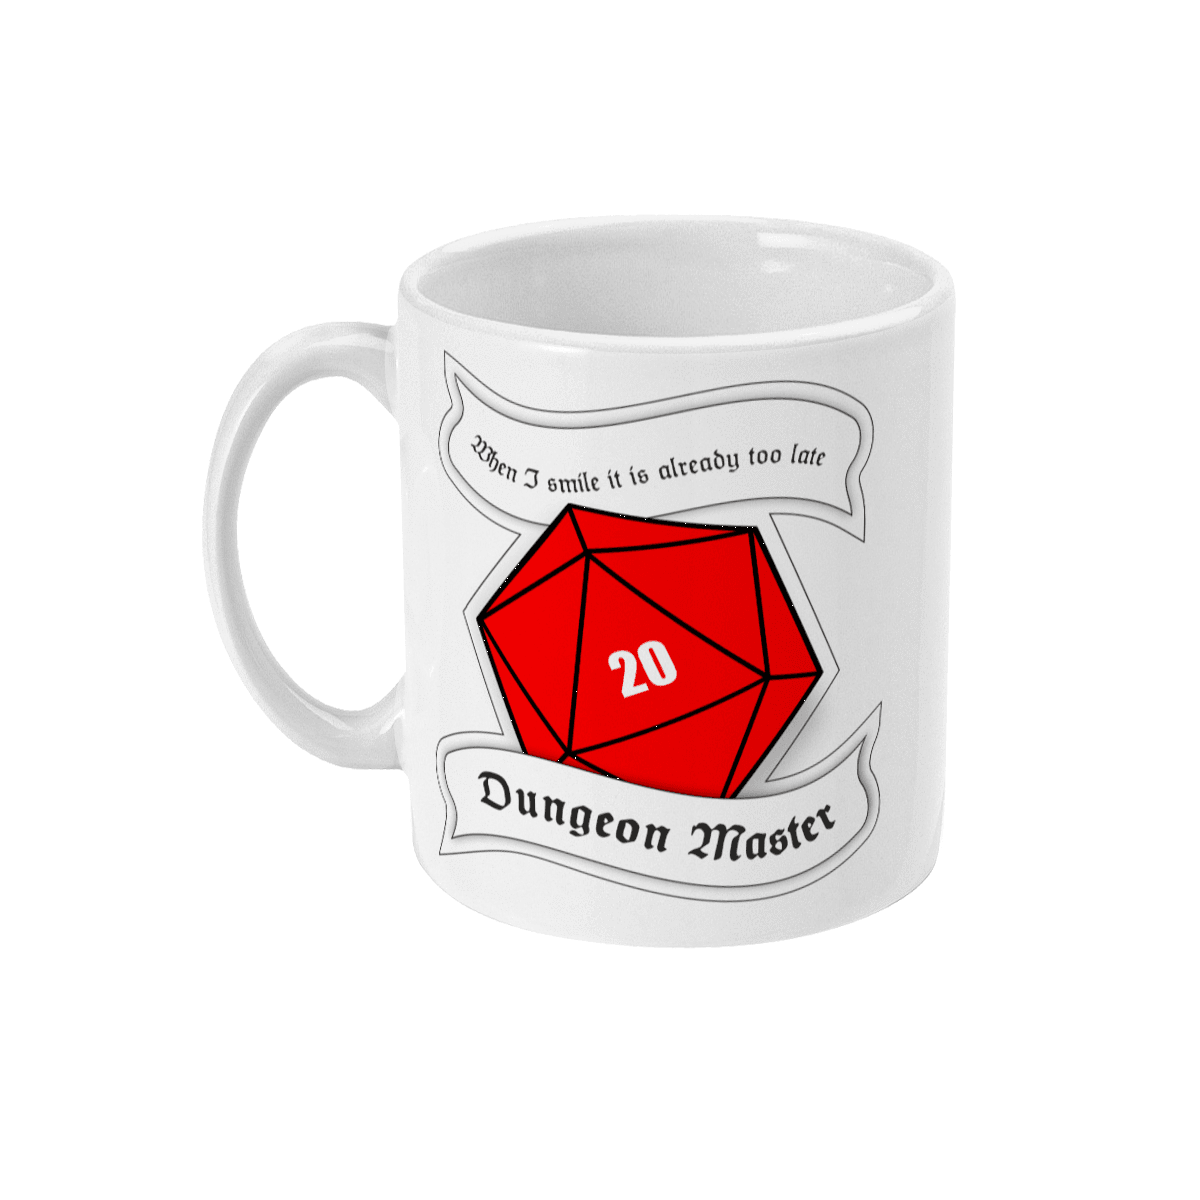 Red Berry Crafts Ltd:Dungeon Master 11oz Ceramic Mug